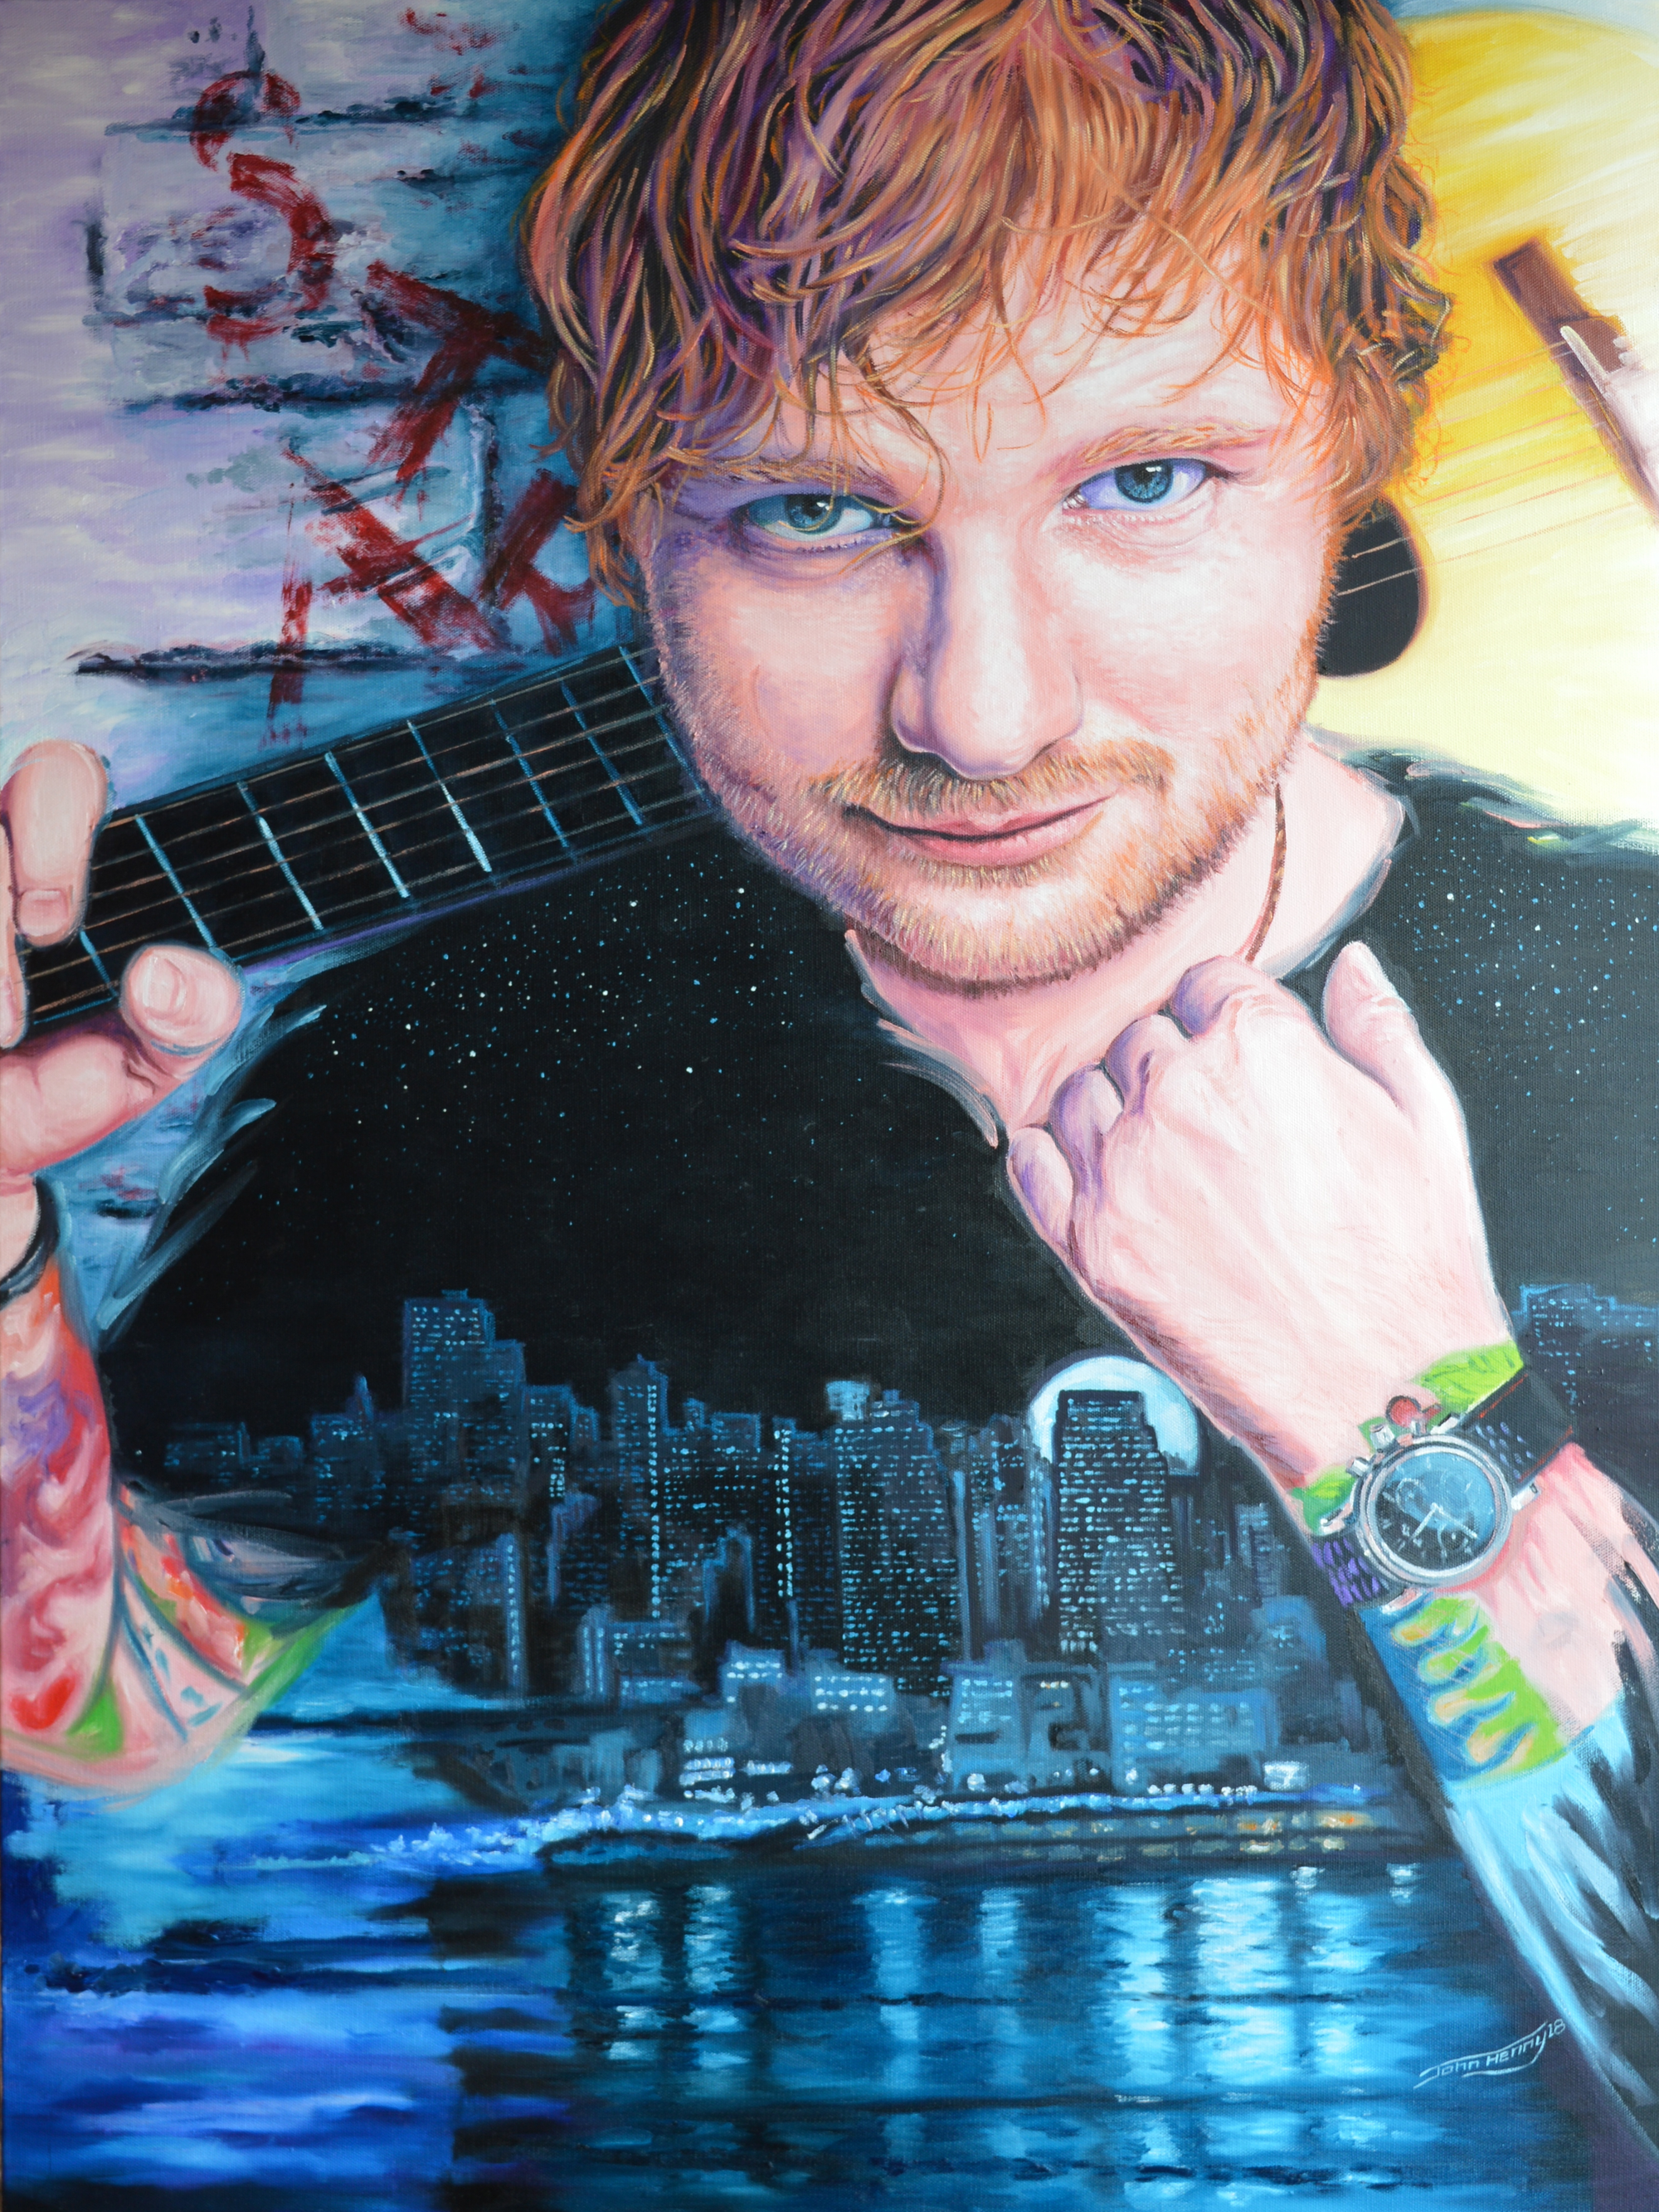 Ed Sheeran - ALL OF THE STARS